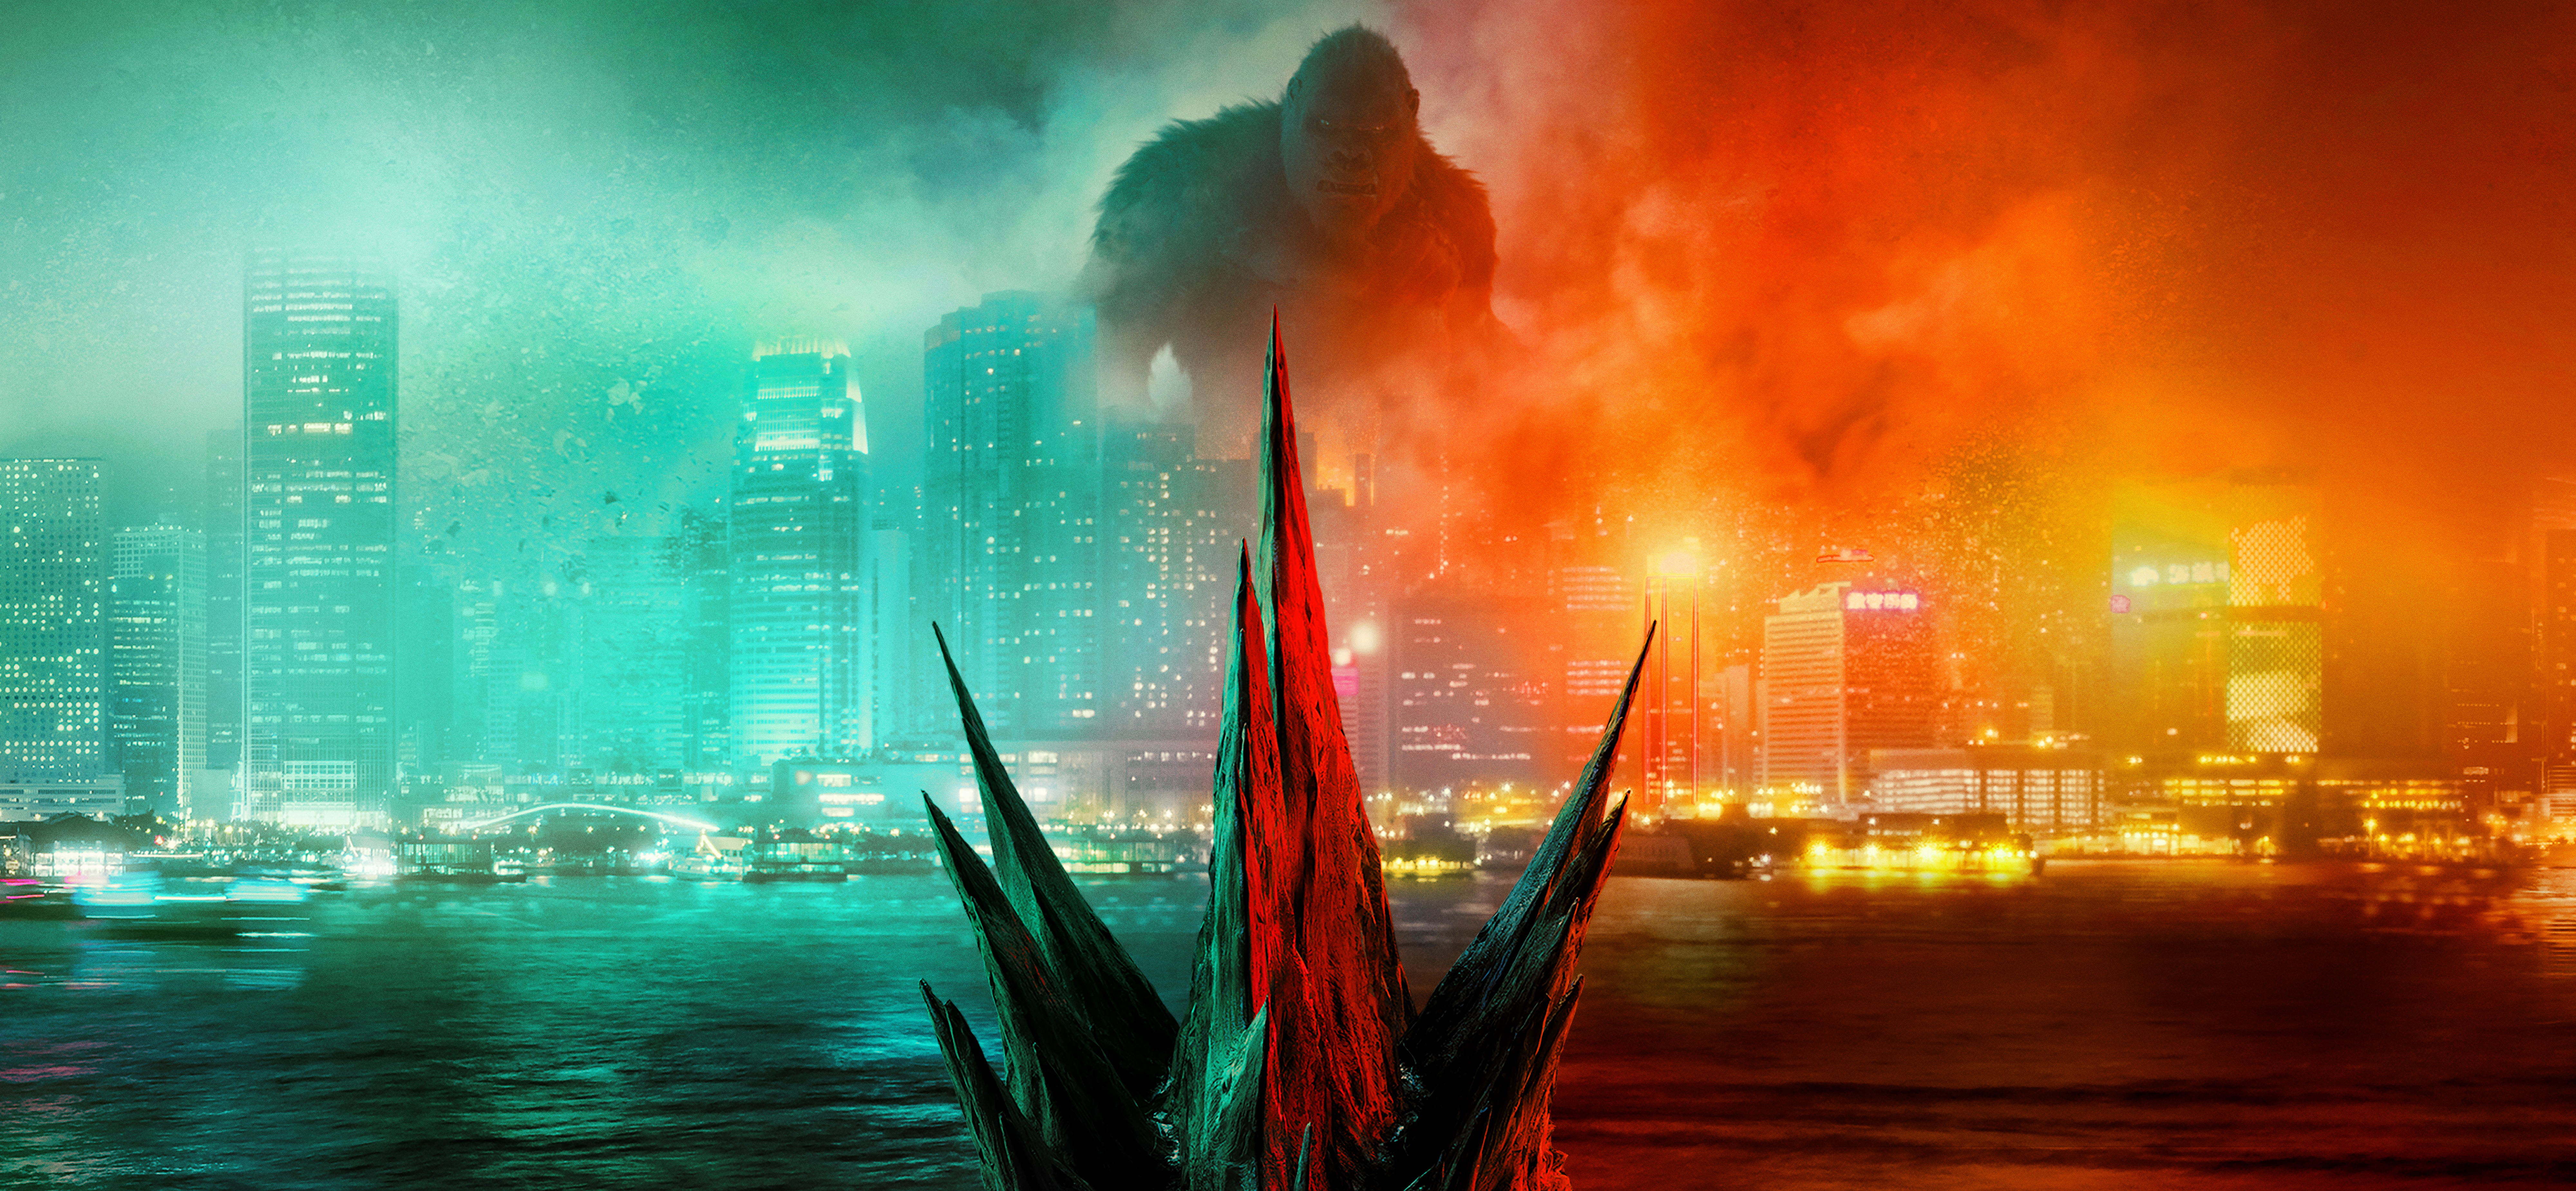 Movie Godzilla vs Kong 4k Ultra HD Wallpaper